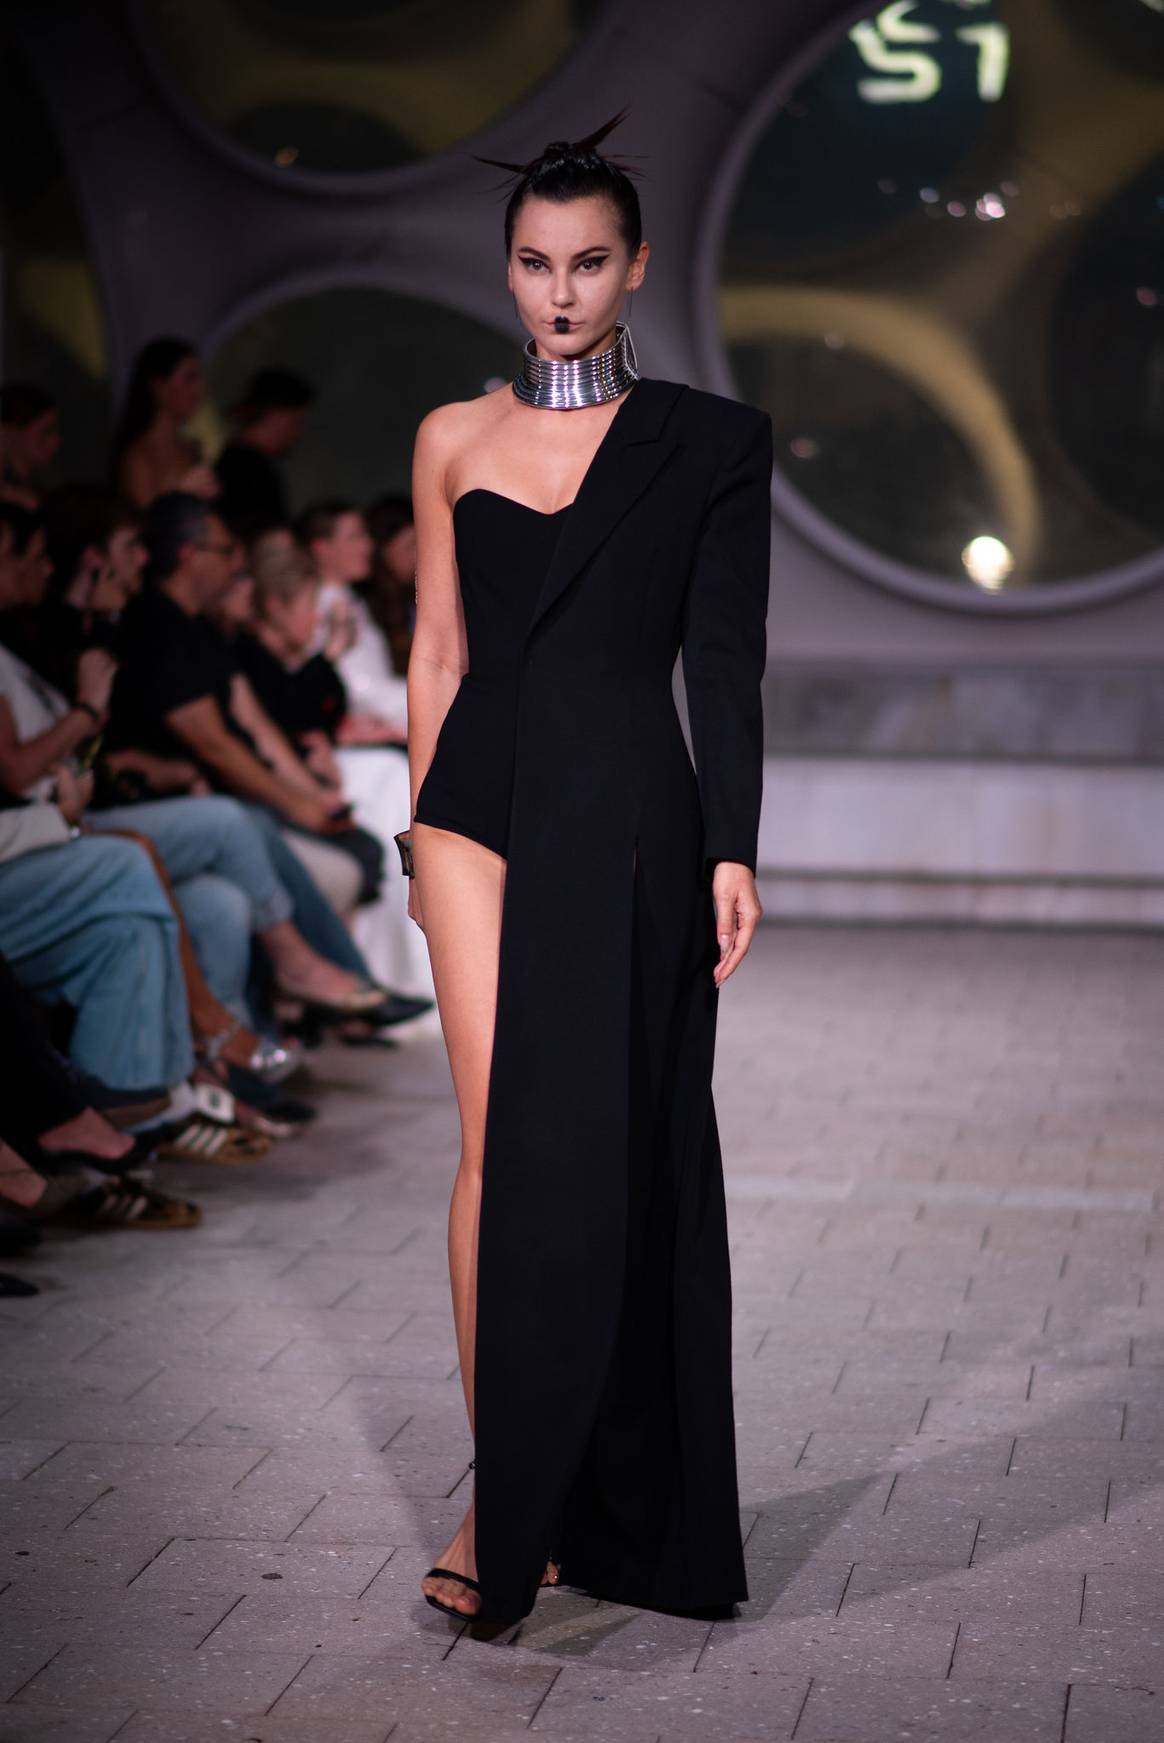 A look by Veronica Espinosa at the Istituto Marangoni inaugural student fashion show, May 2024.